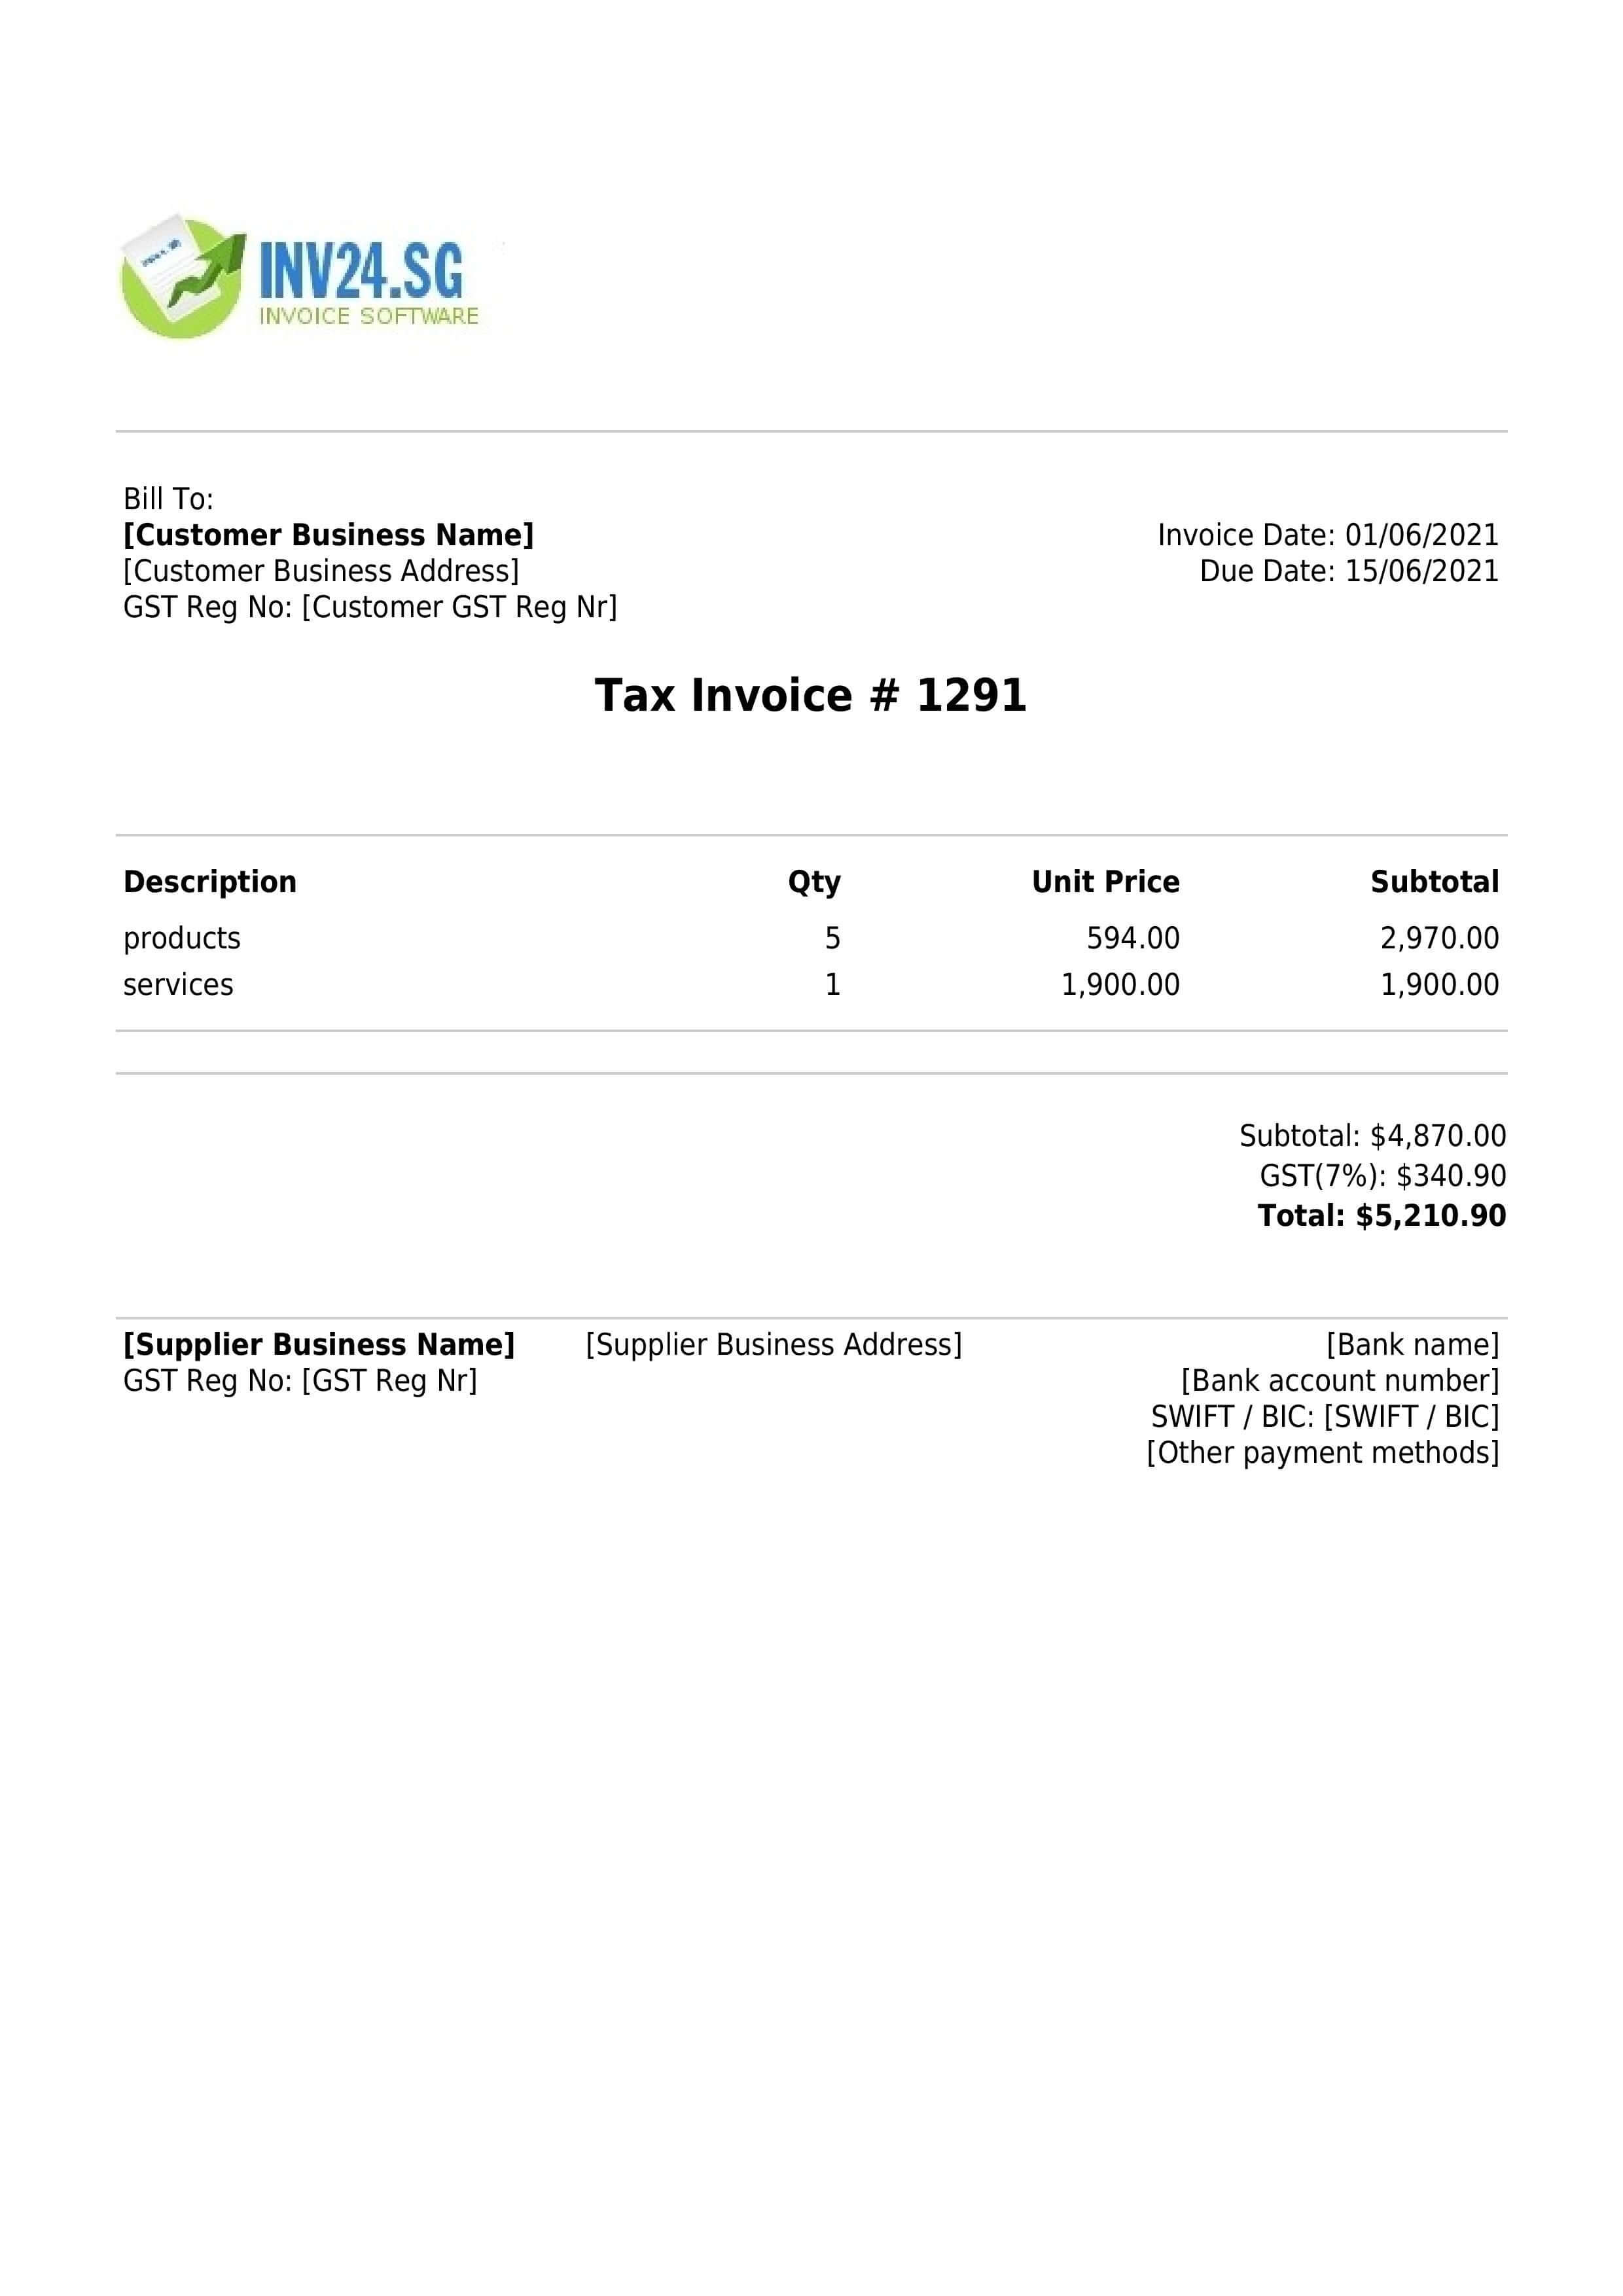 Singapore GST invoice sample